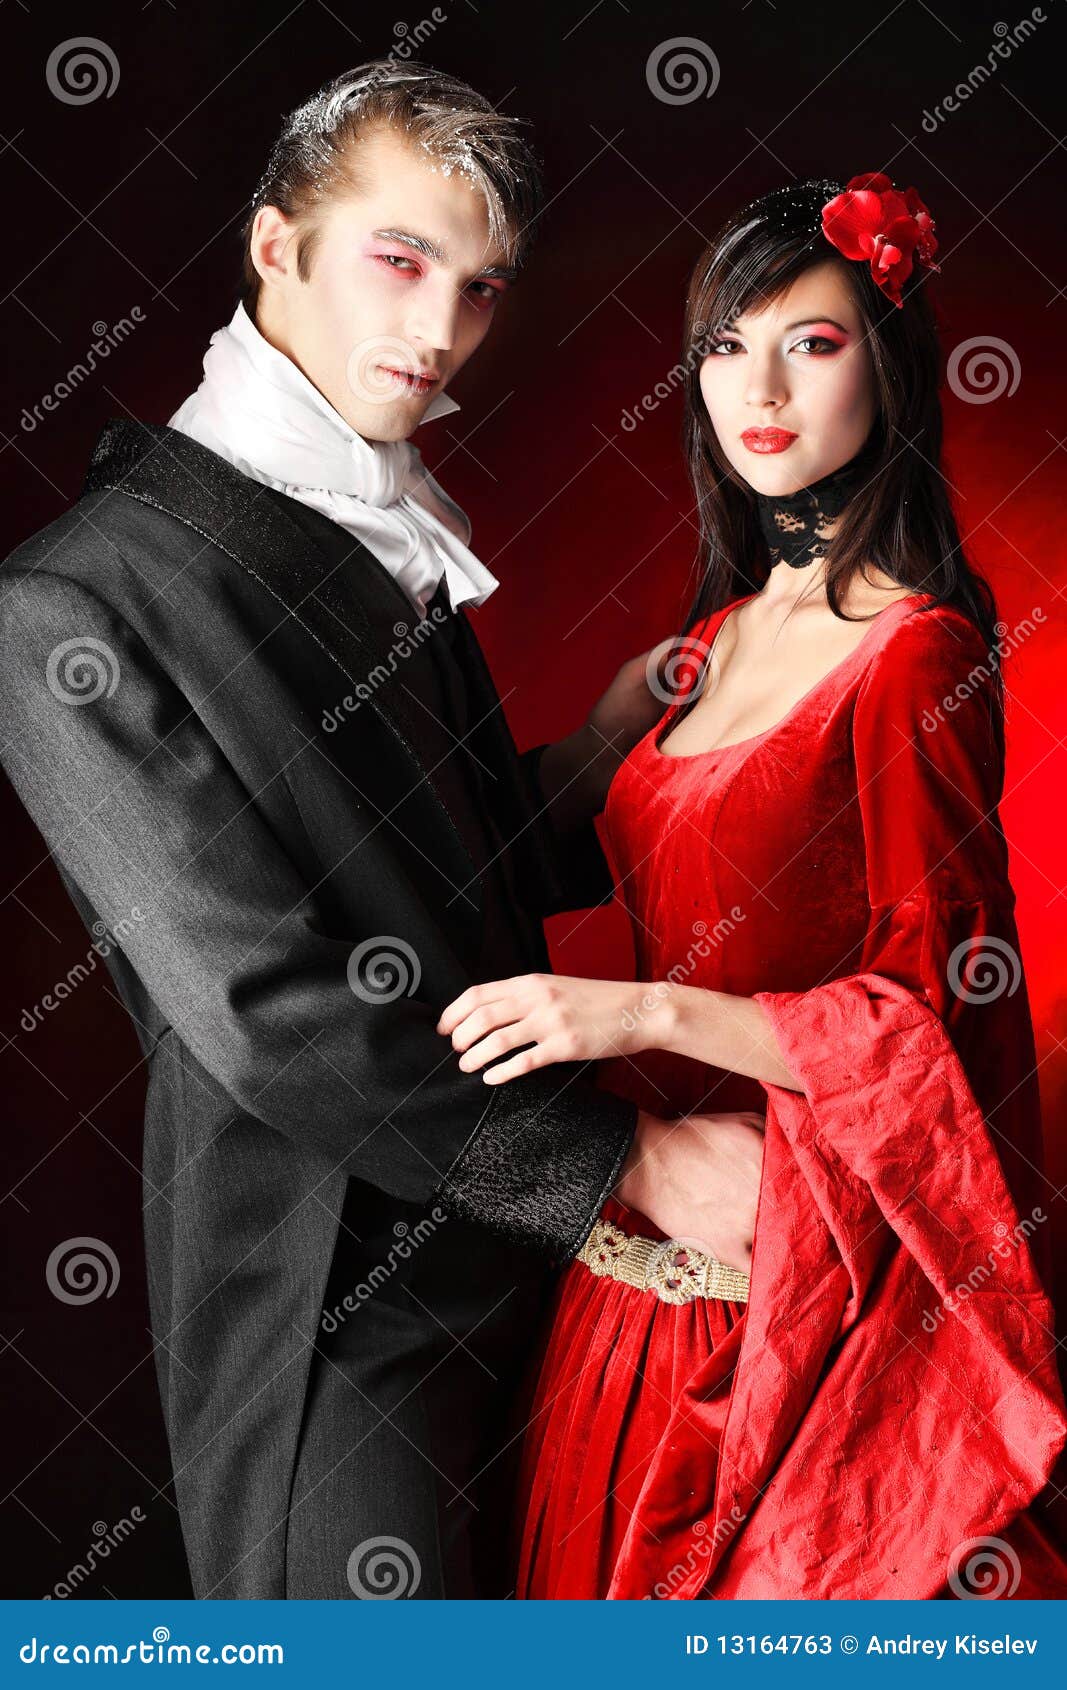 Vampires Couple Stock Photos - Image: 13164763